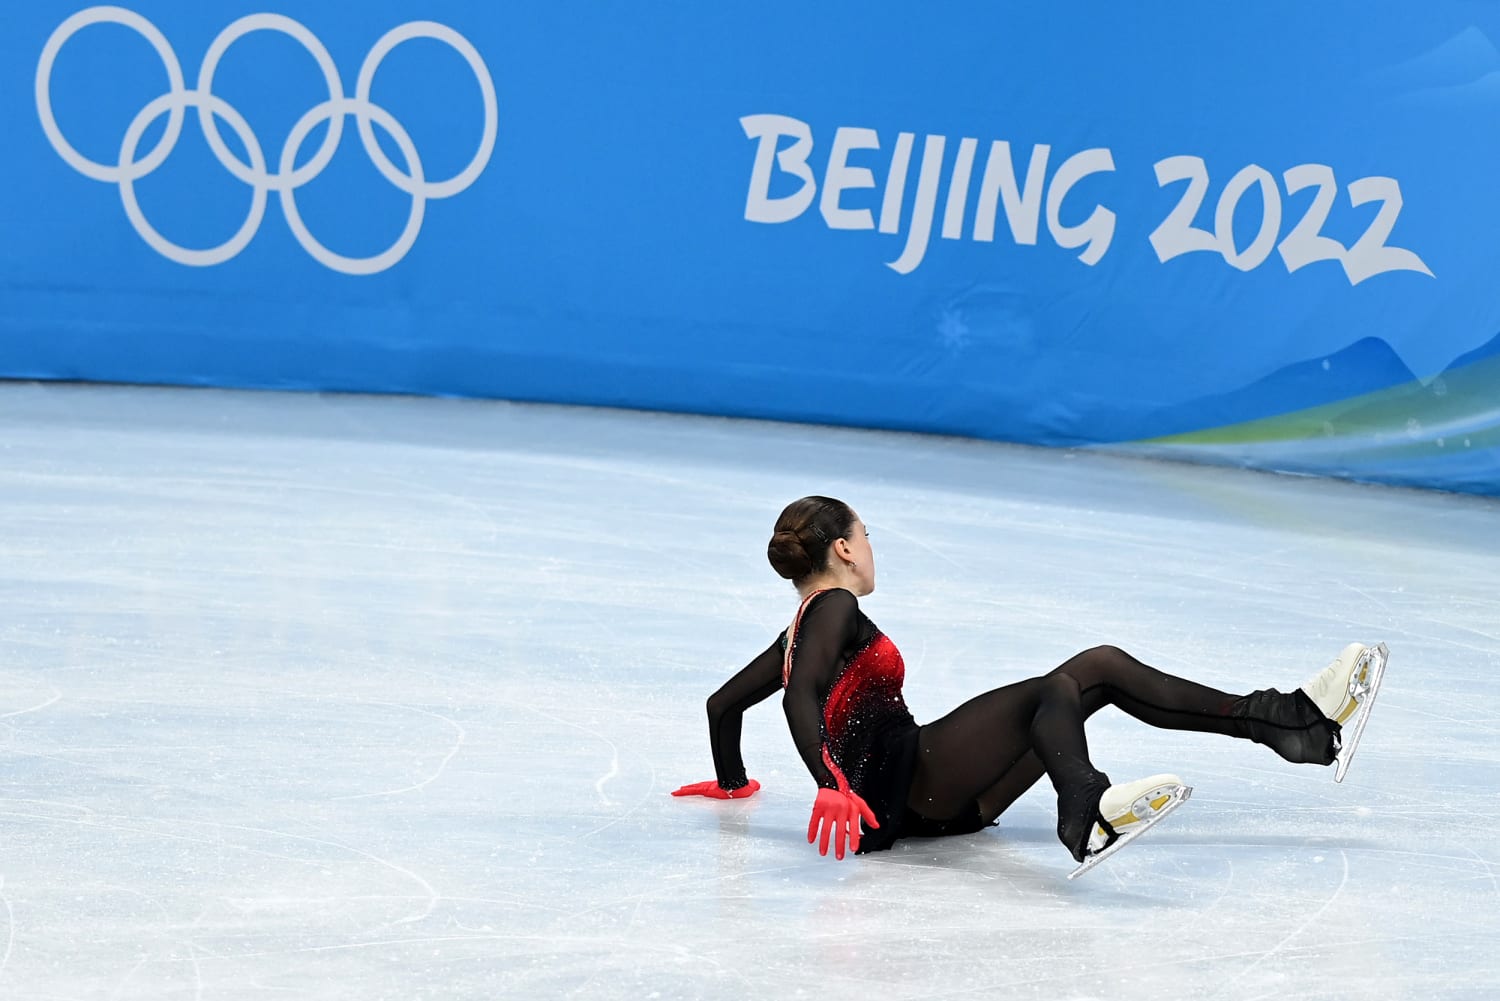 Russian figure skater Kamila Valieva falls to shocking 4th in womens final after Winter Olympics doping saga